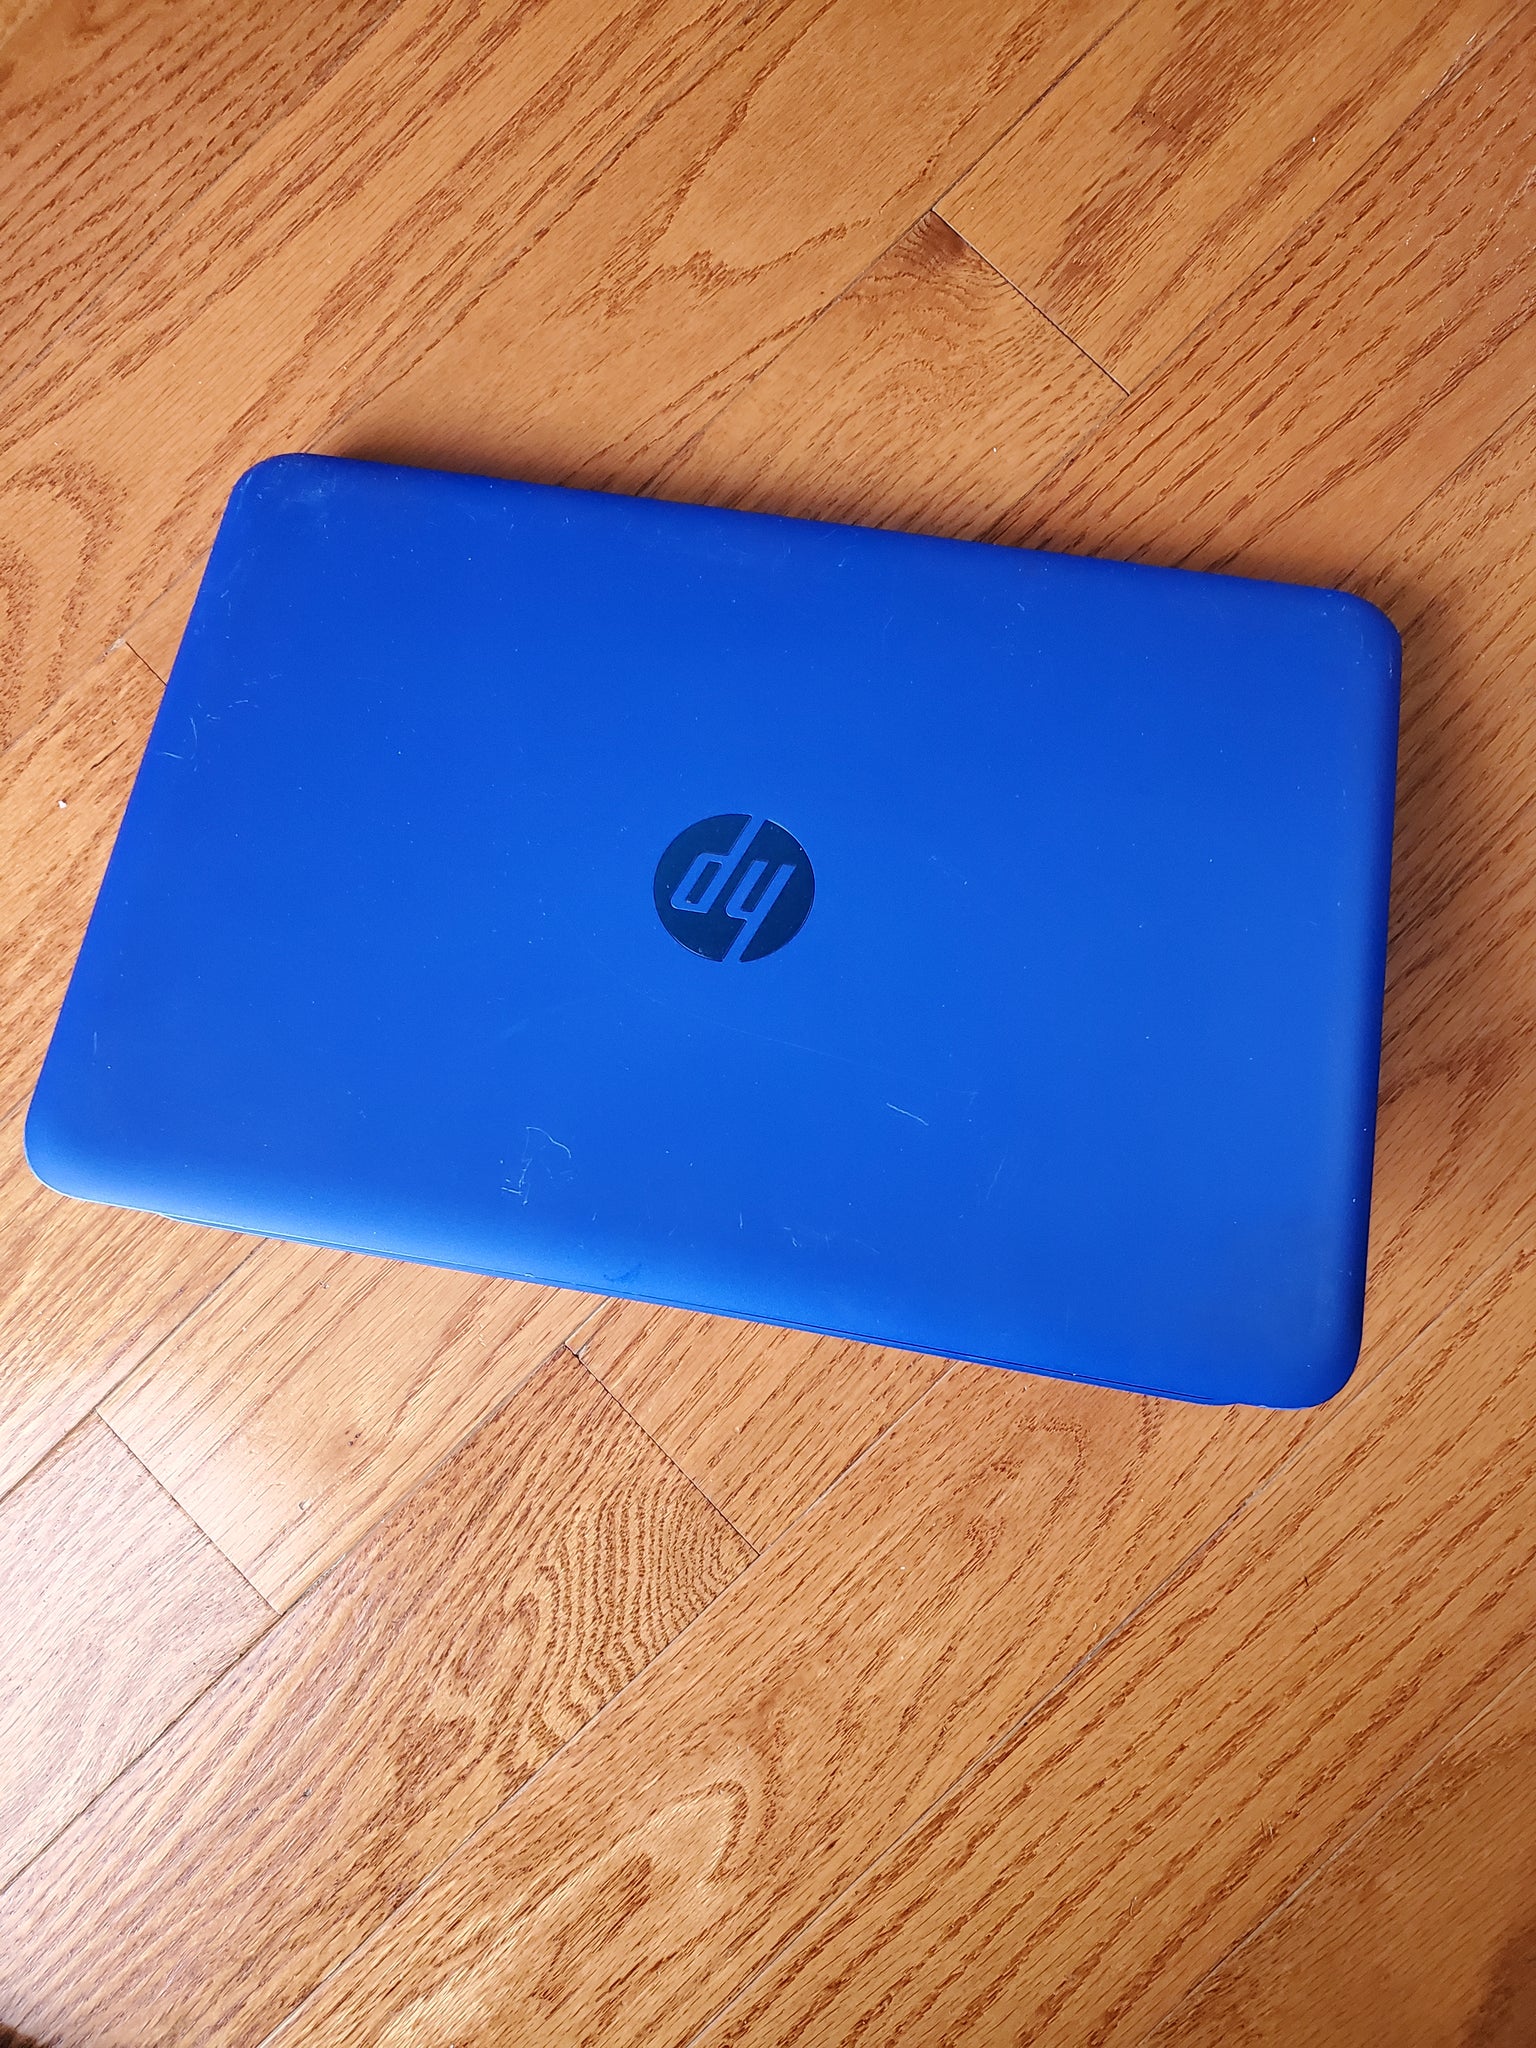 HP STREAM 13.3" Laptop, Intel Celeron N3050 @ 1.60GHZ (2GB – KenDoTronics